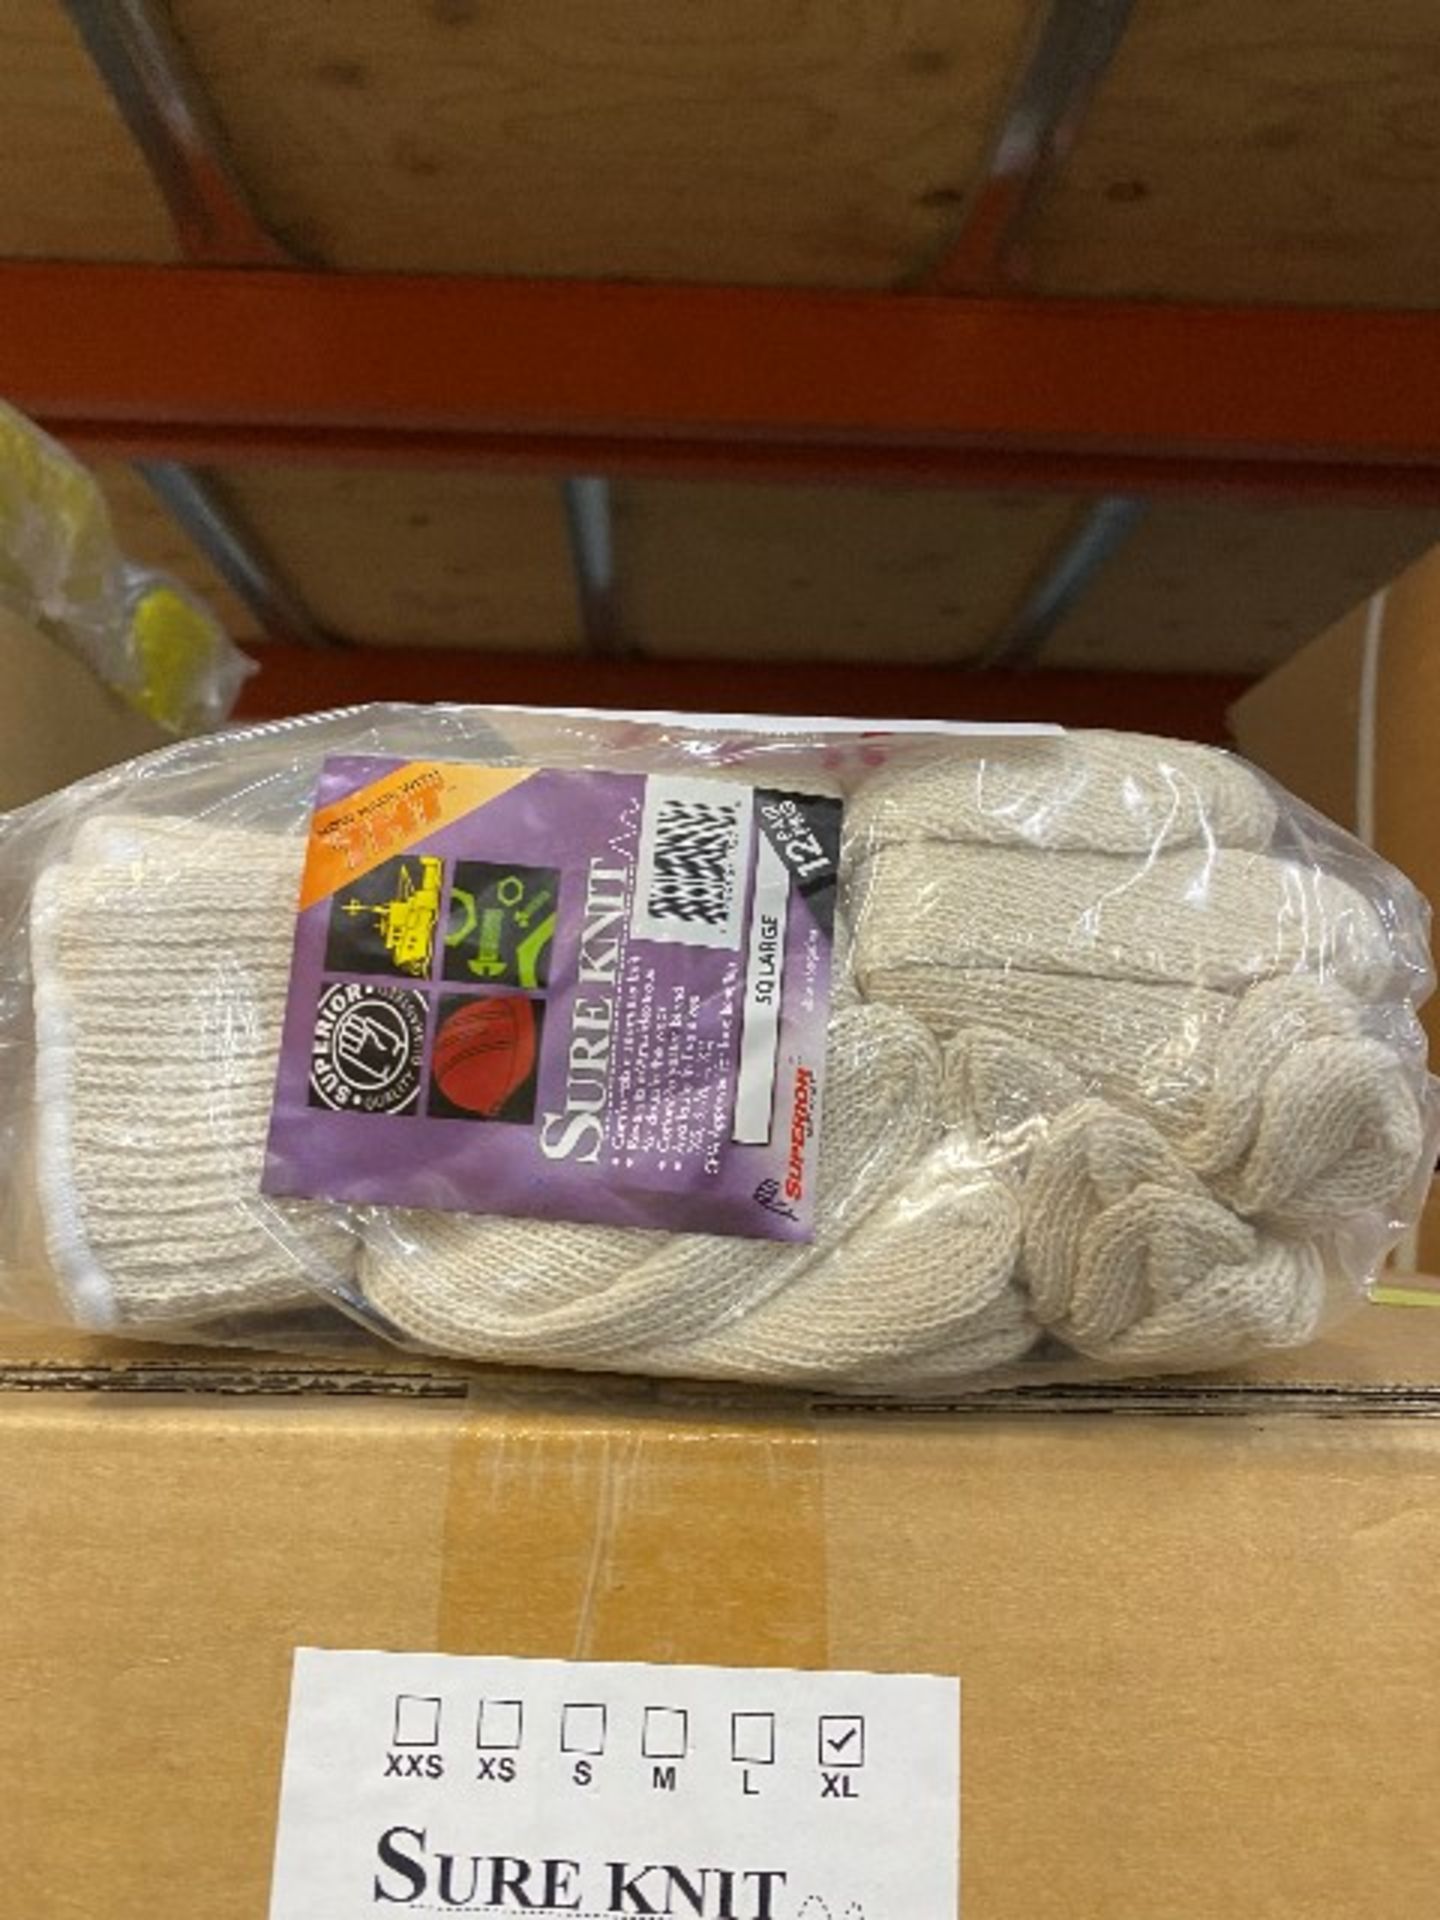 Superior Sure-Knit string knit, cotton/poly blend,size: x-large, 20 dozens - Image 2 of 3